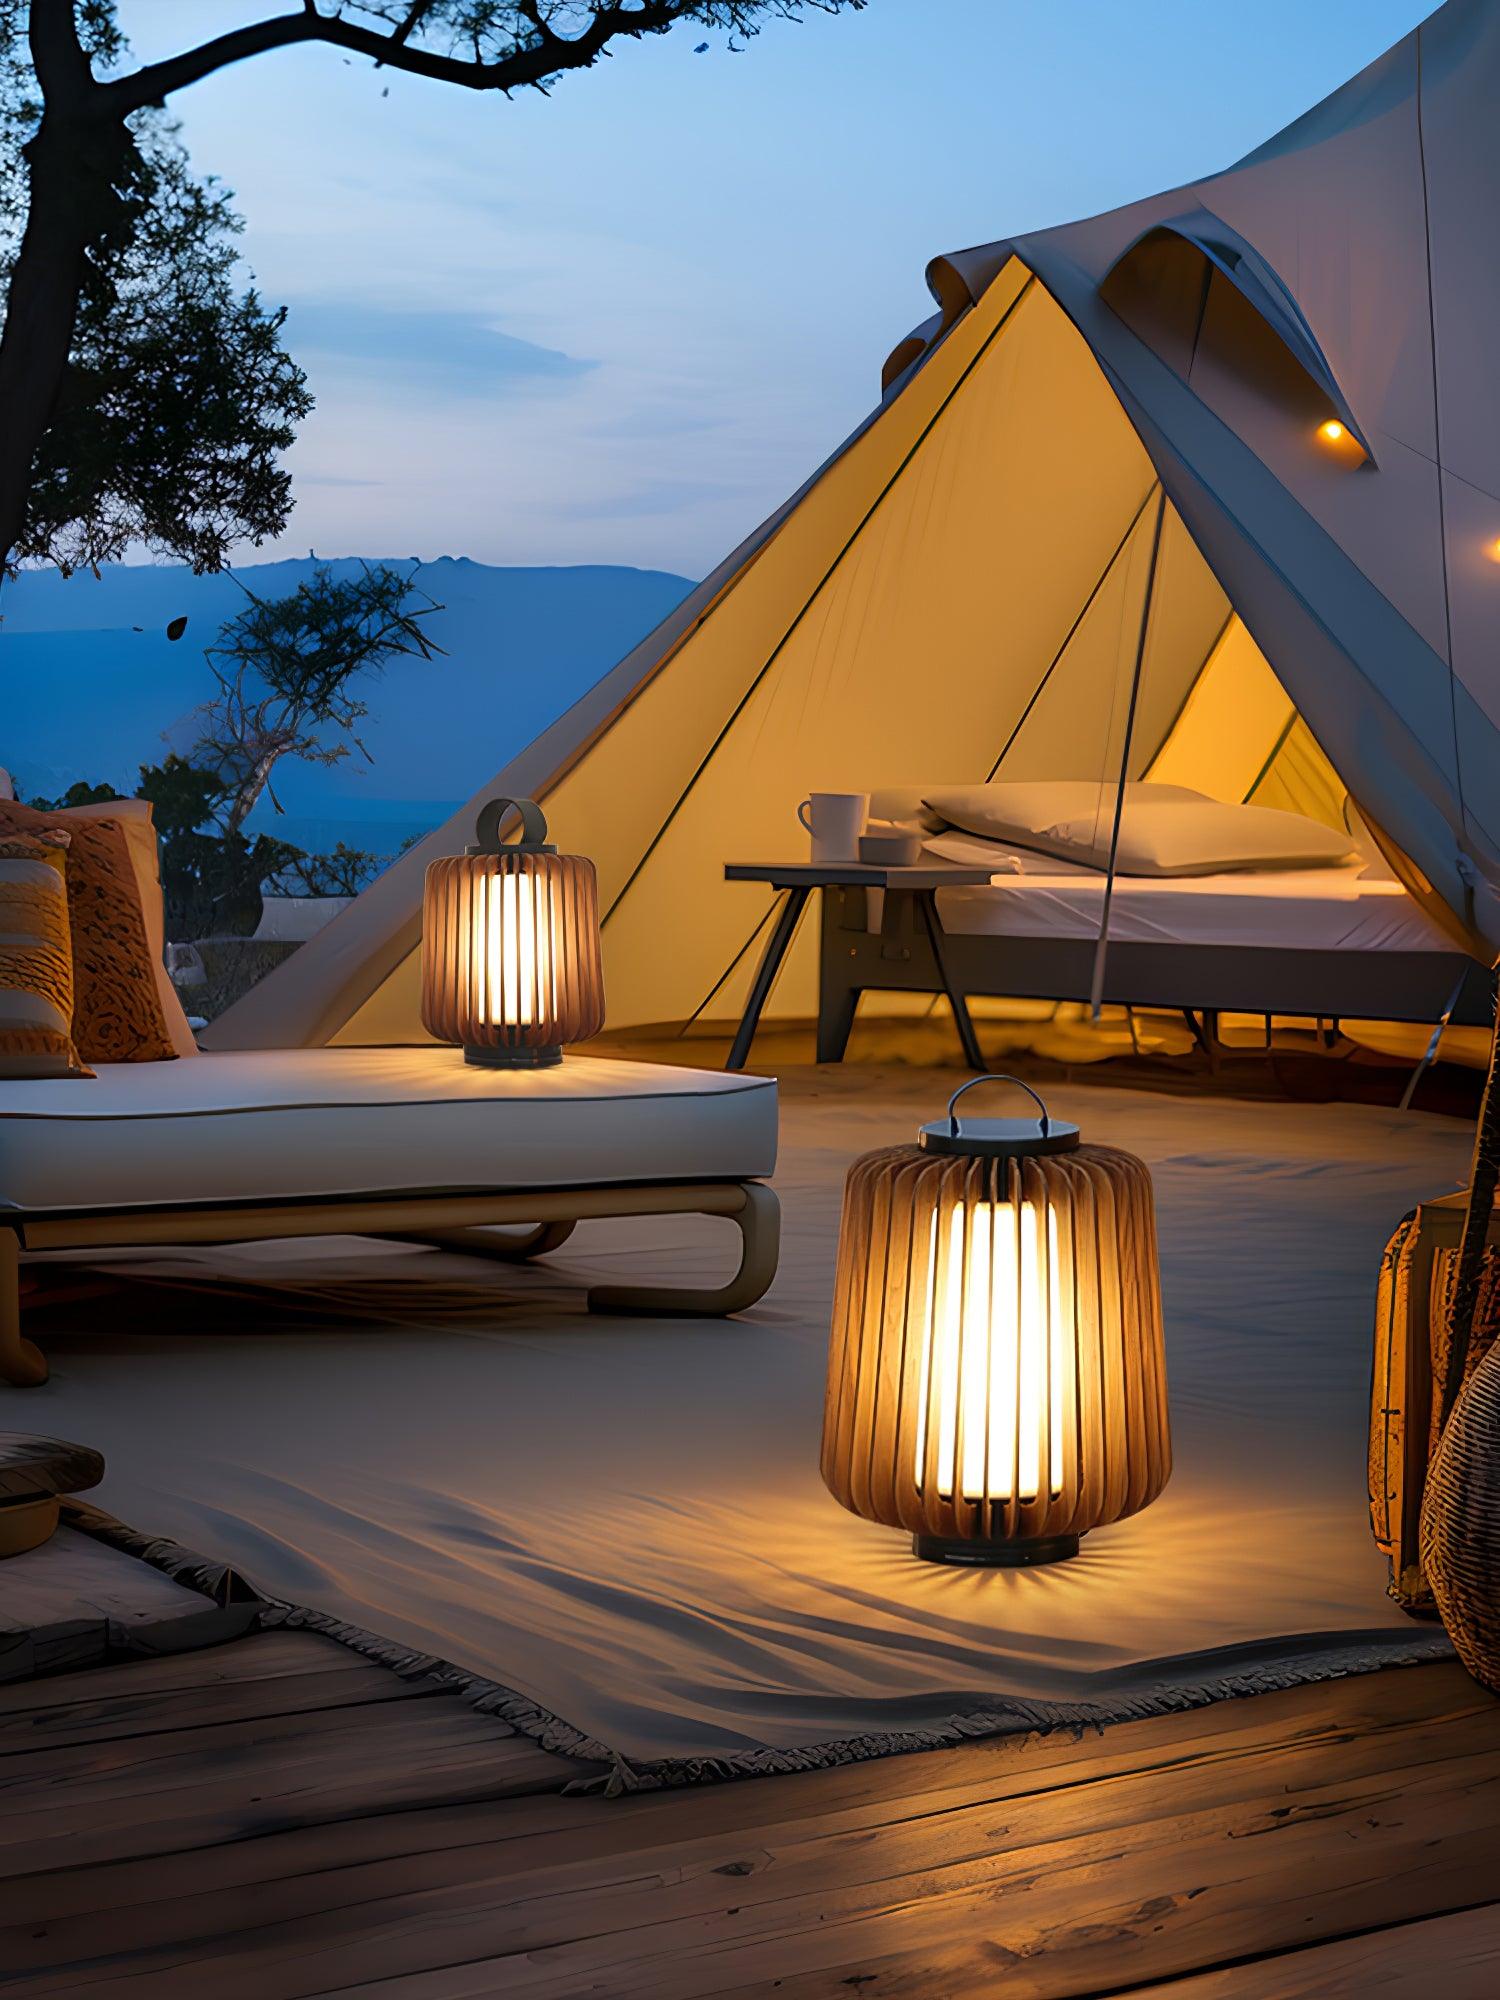 Camping Tent Lighting Ideas  Tent glamping, Camping lights, Backyard  lighting